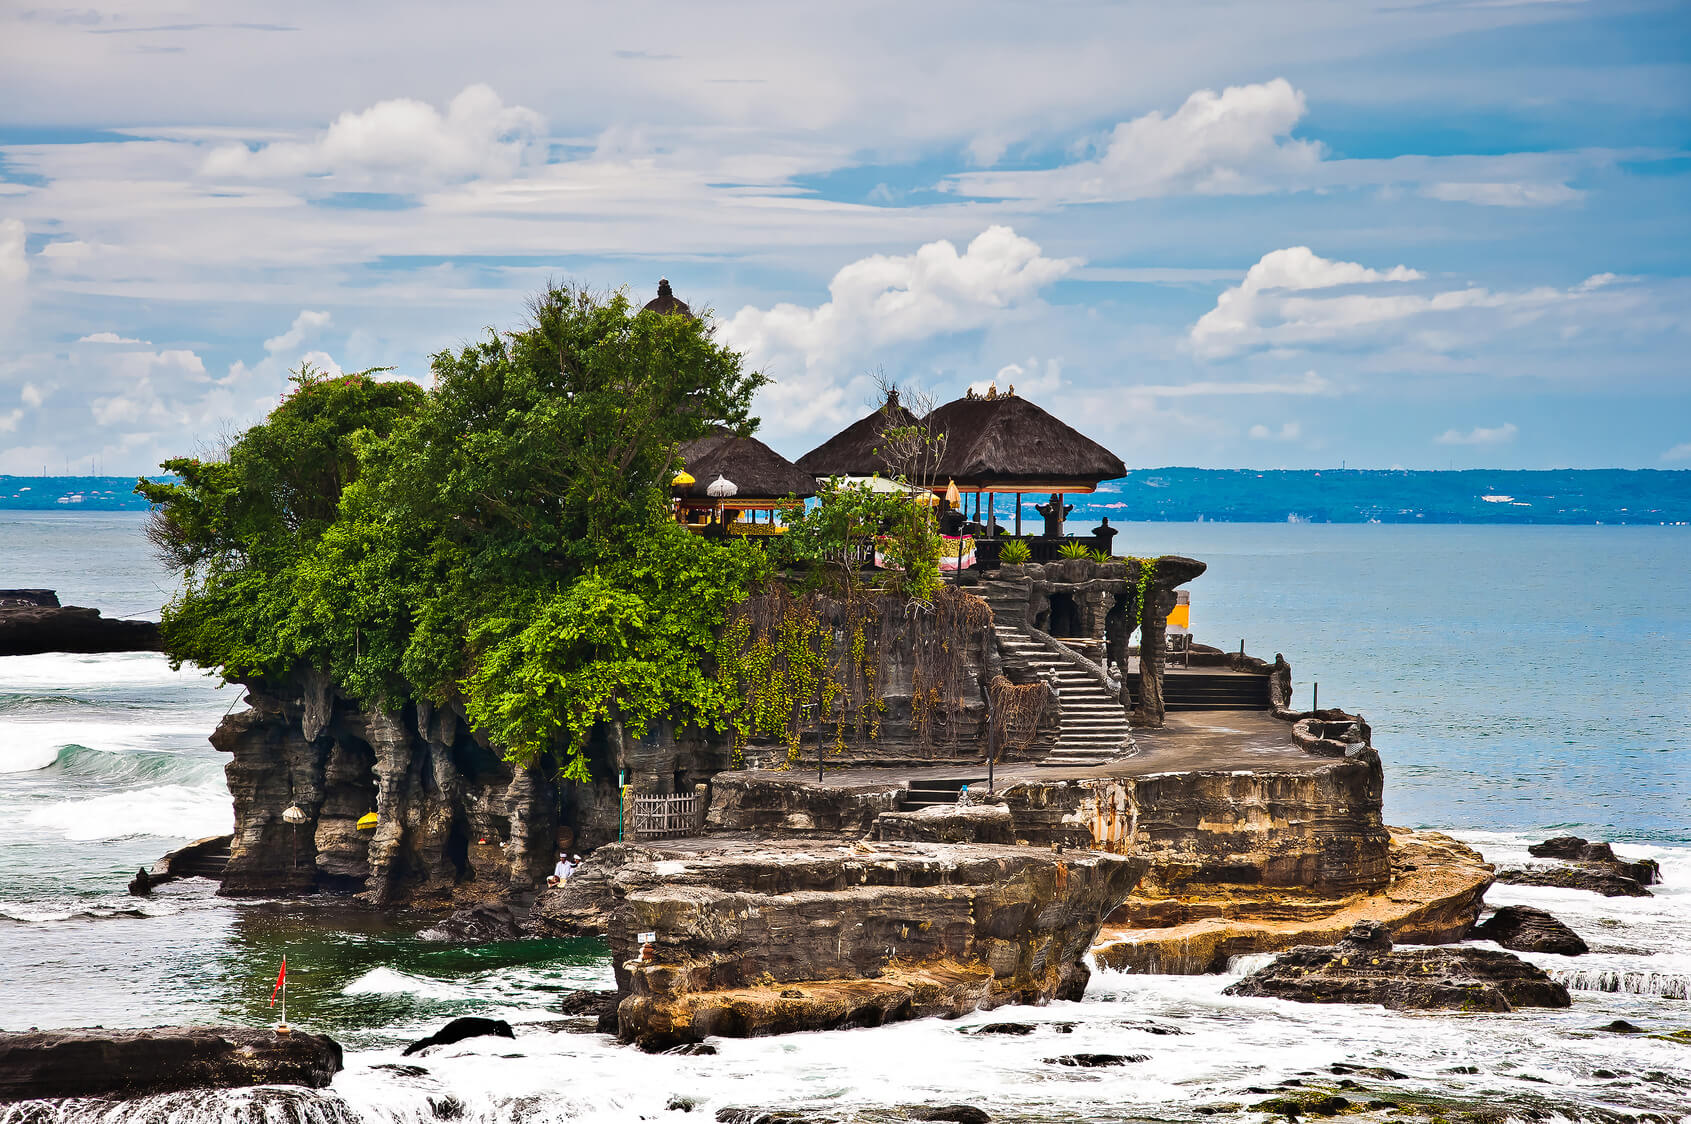 Spiagge bianche, natura incontaminata e vita notturna friendly: Bali mette tutti d'accordo - Tanah Lot Bali - Gay.it